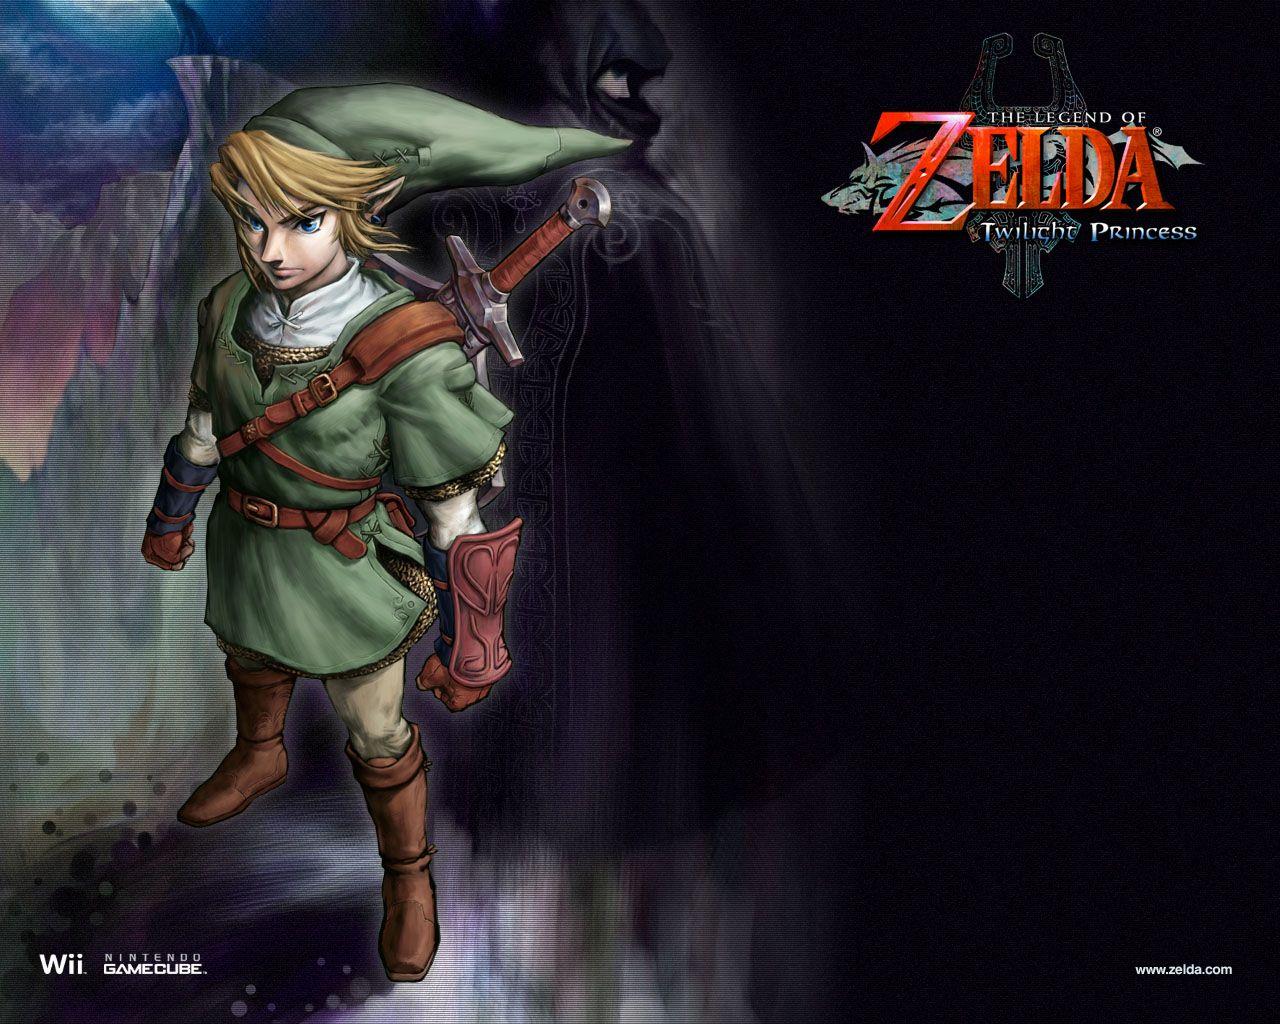 Fond ecran, wallpaper The Legend Of Zelda, Twilight Princess